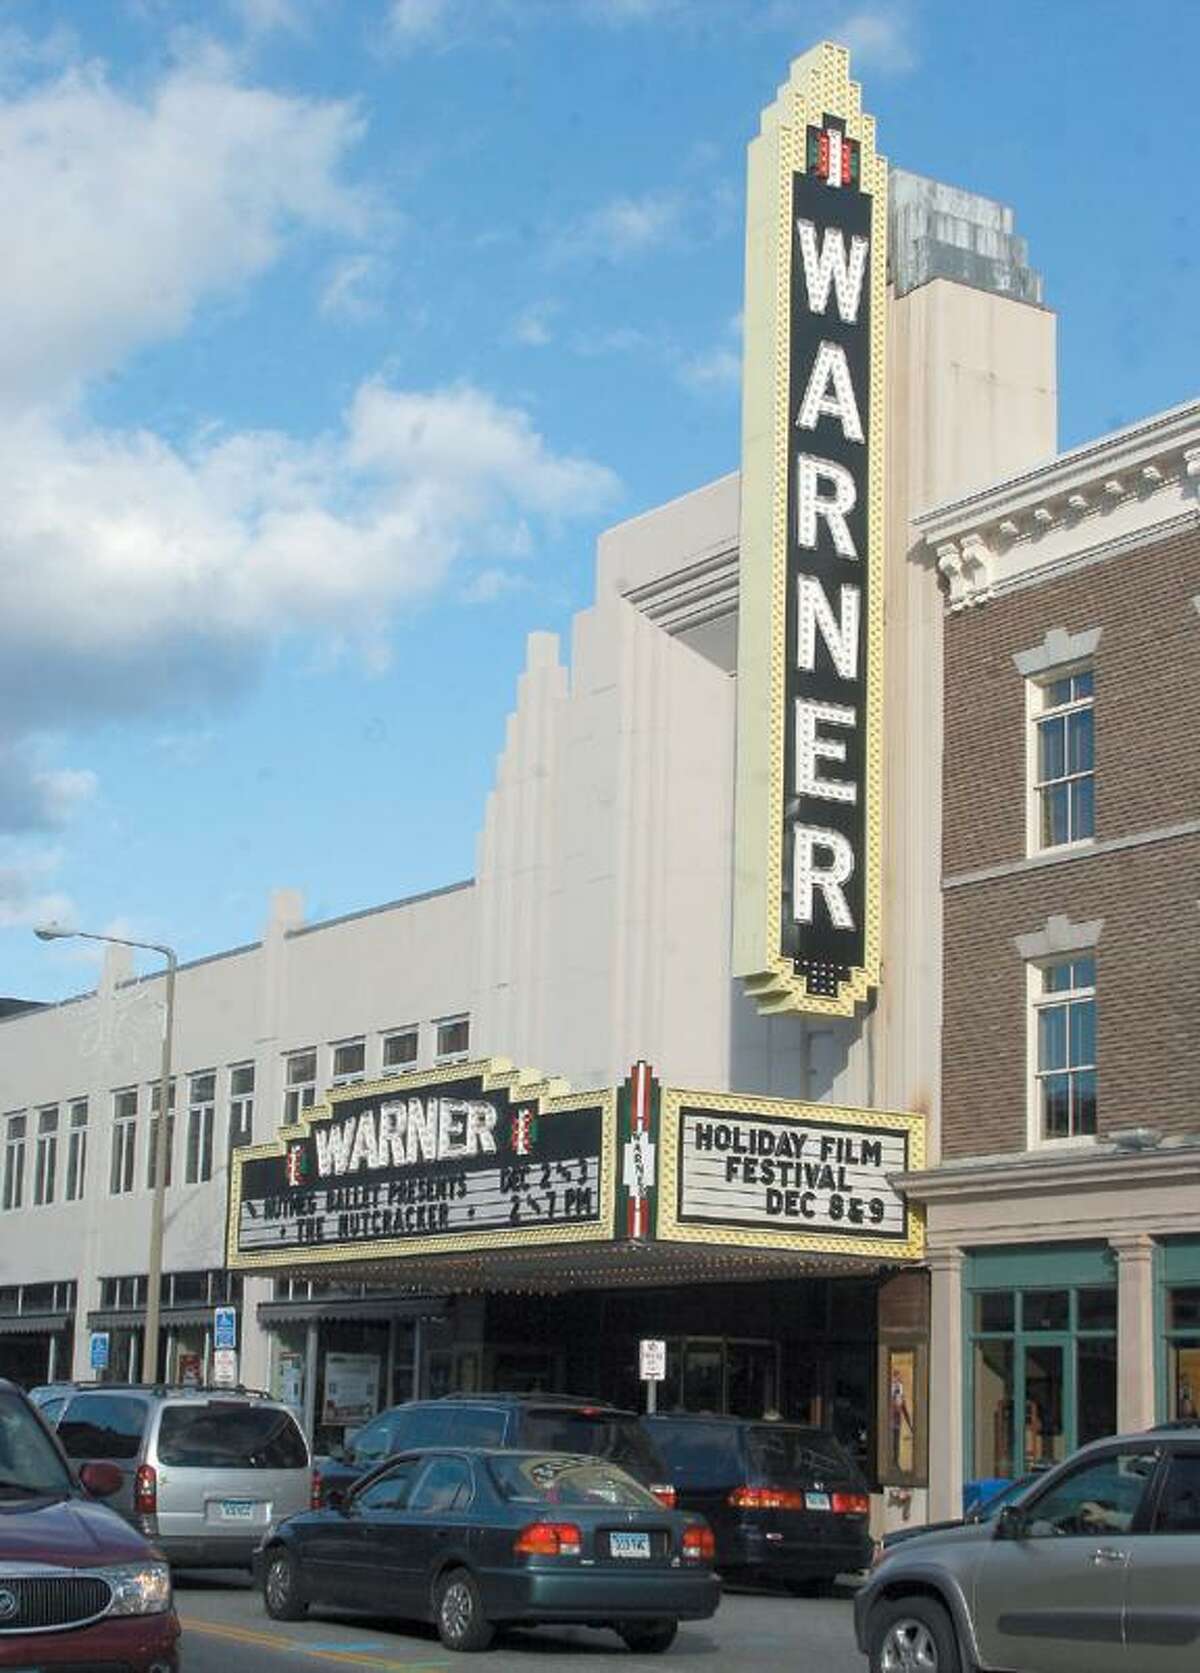 The Warner Theatre in downtown Torrington, CT.